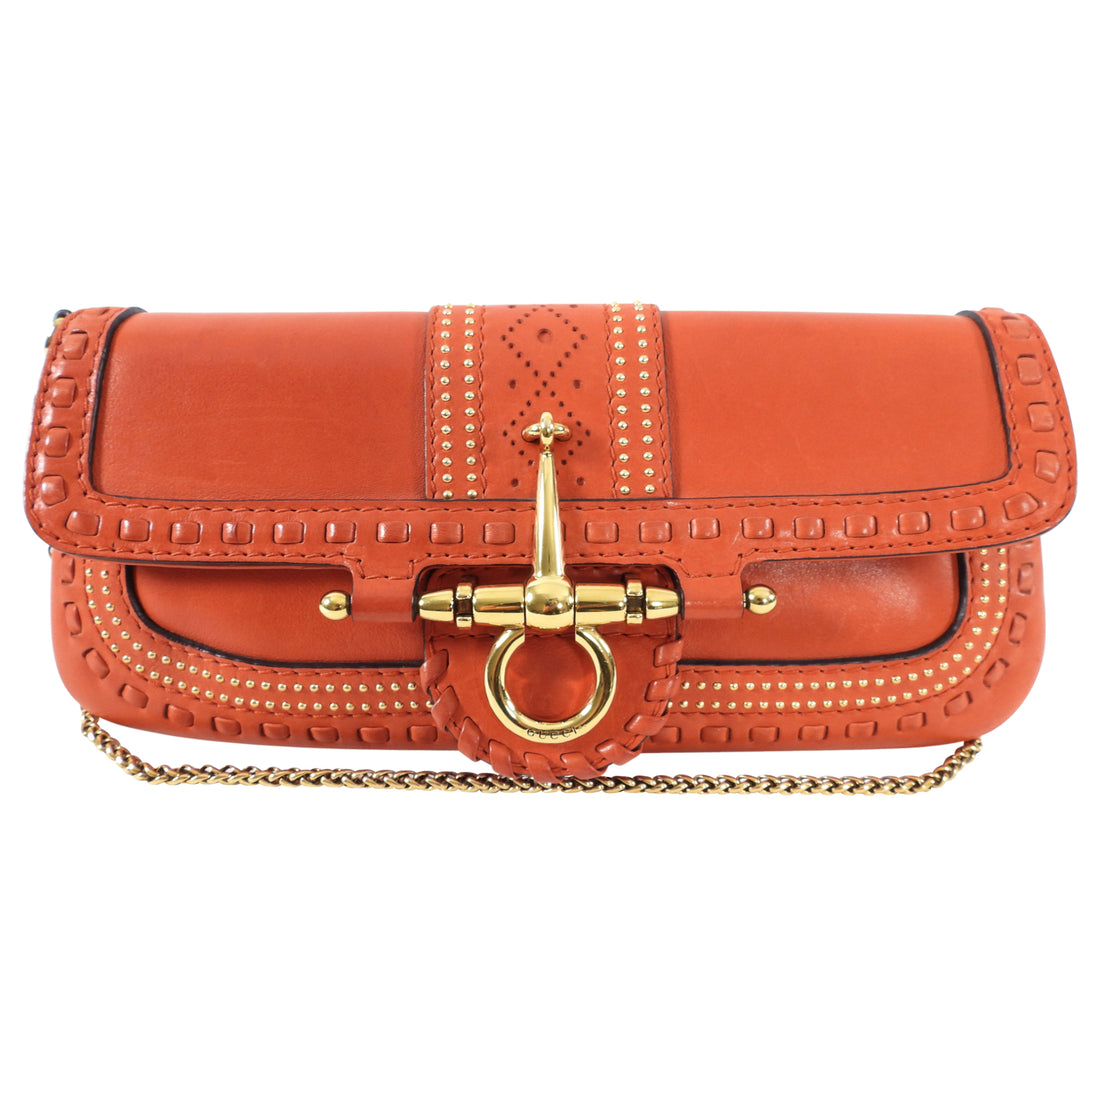 Gucci handbag Stock Photos, Royalty Free Gucci handbag Images |  Depositphotos